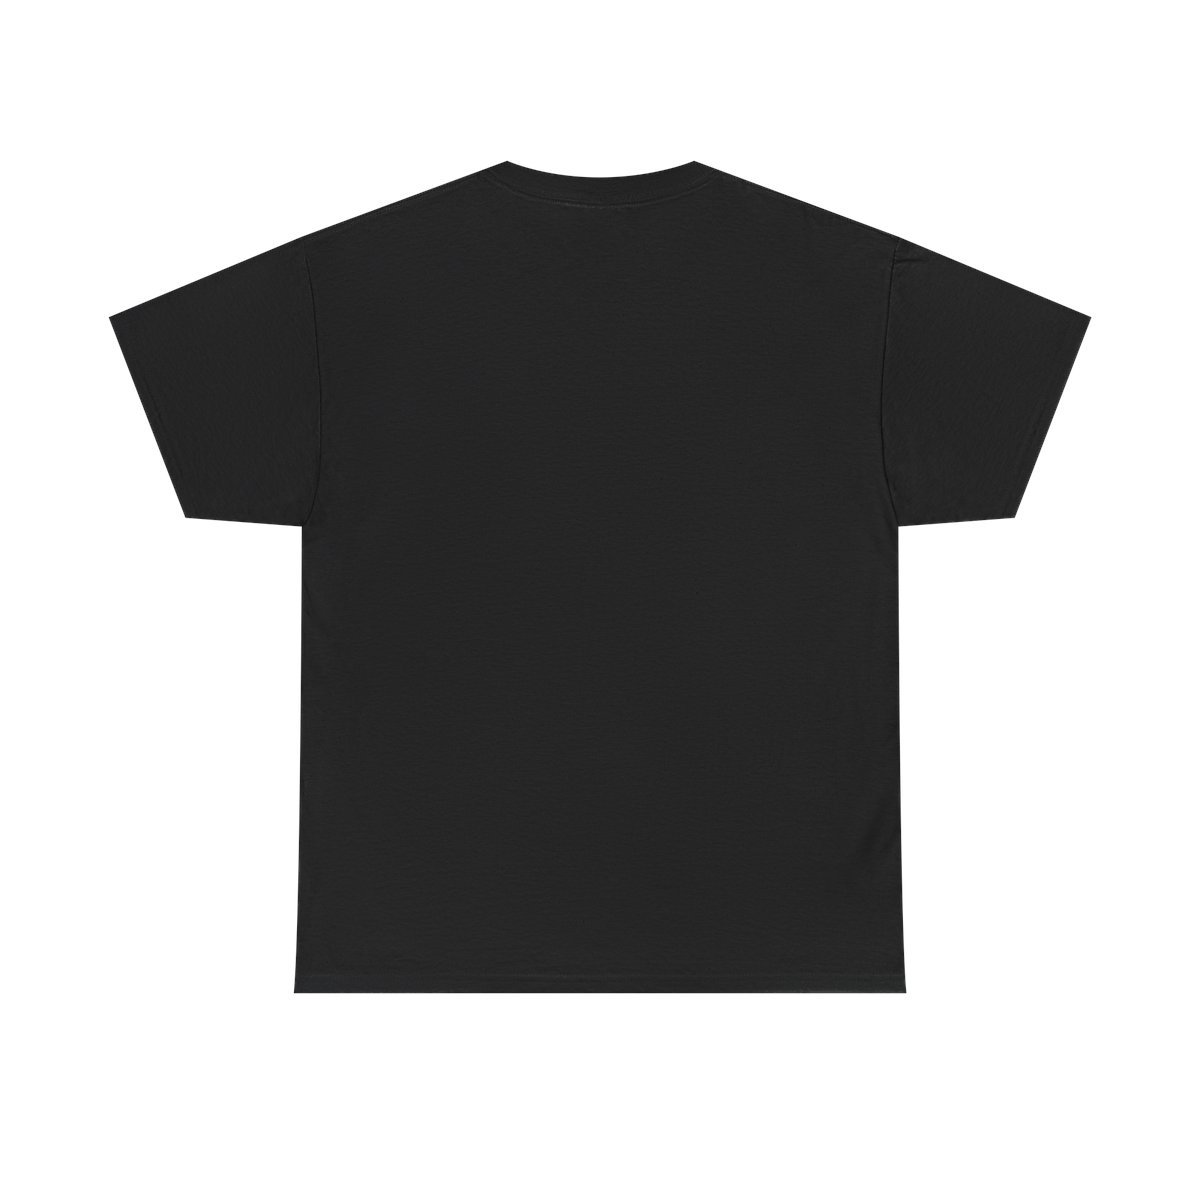 L.S.U. – Grace Shaker Short Sleeve Tshirt